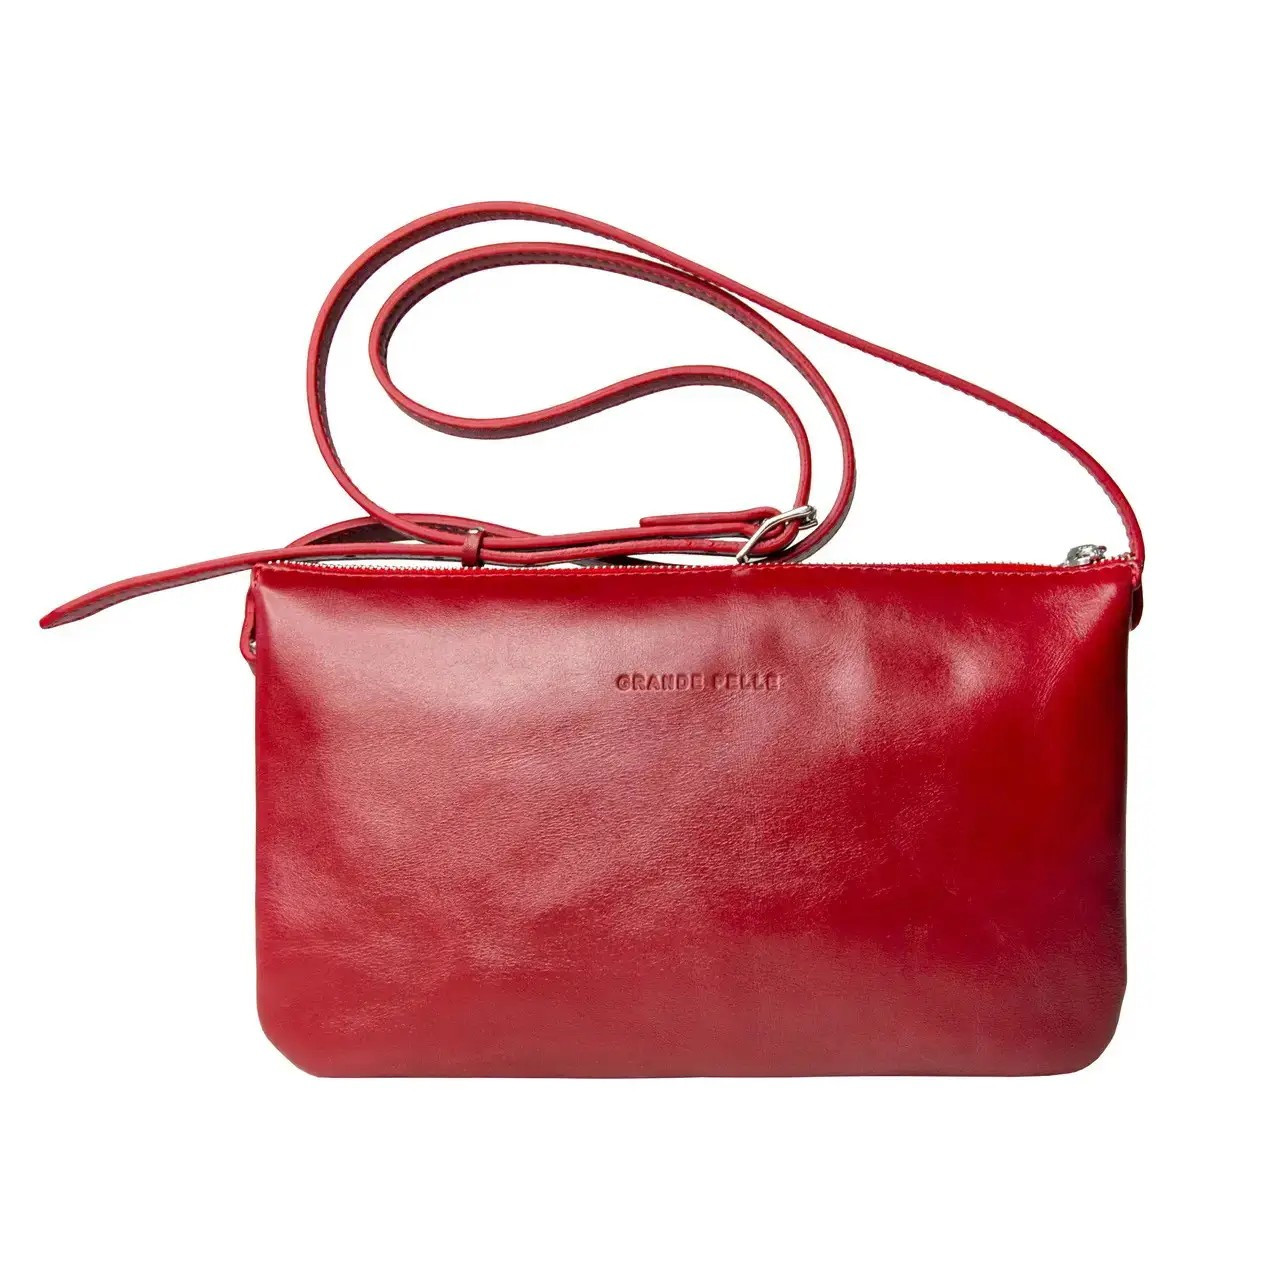 Женская сумка через плечо кросс-боди натуральная кожа красный Арт.7056/6001 "GP" Італія - (Україна), фото 1